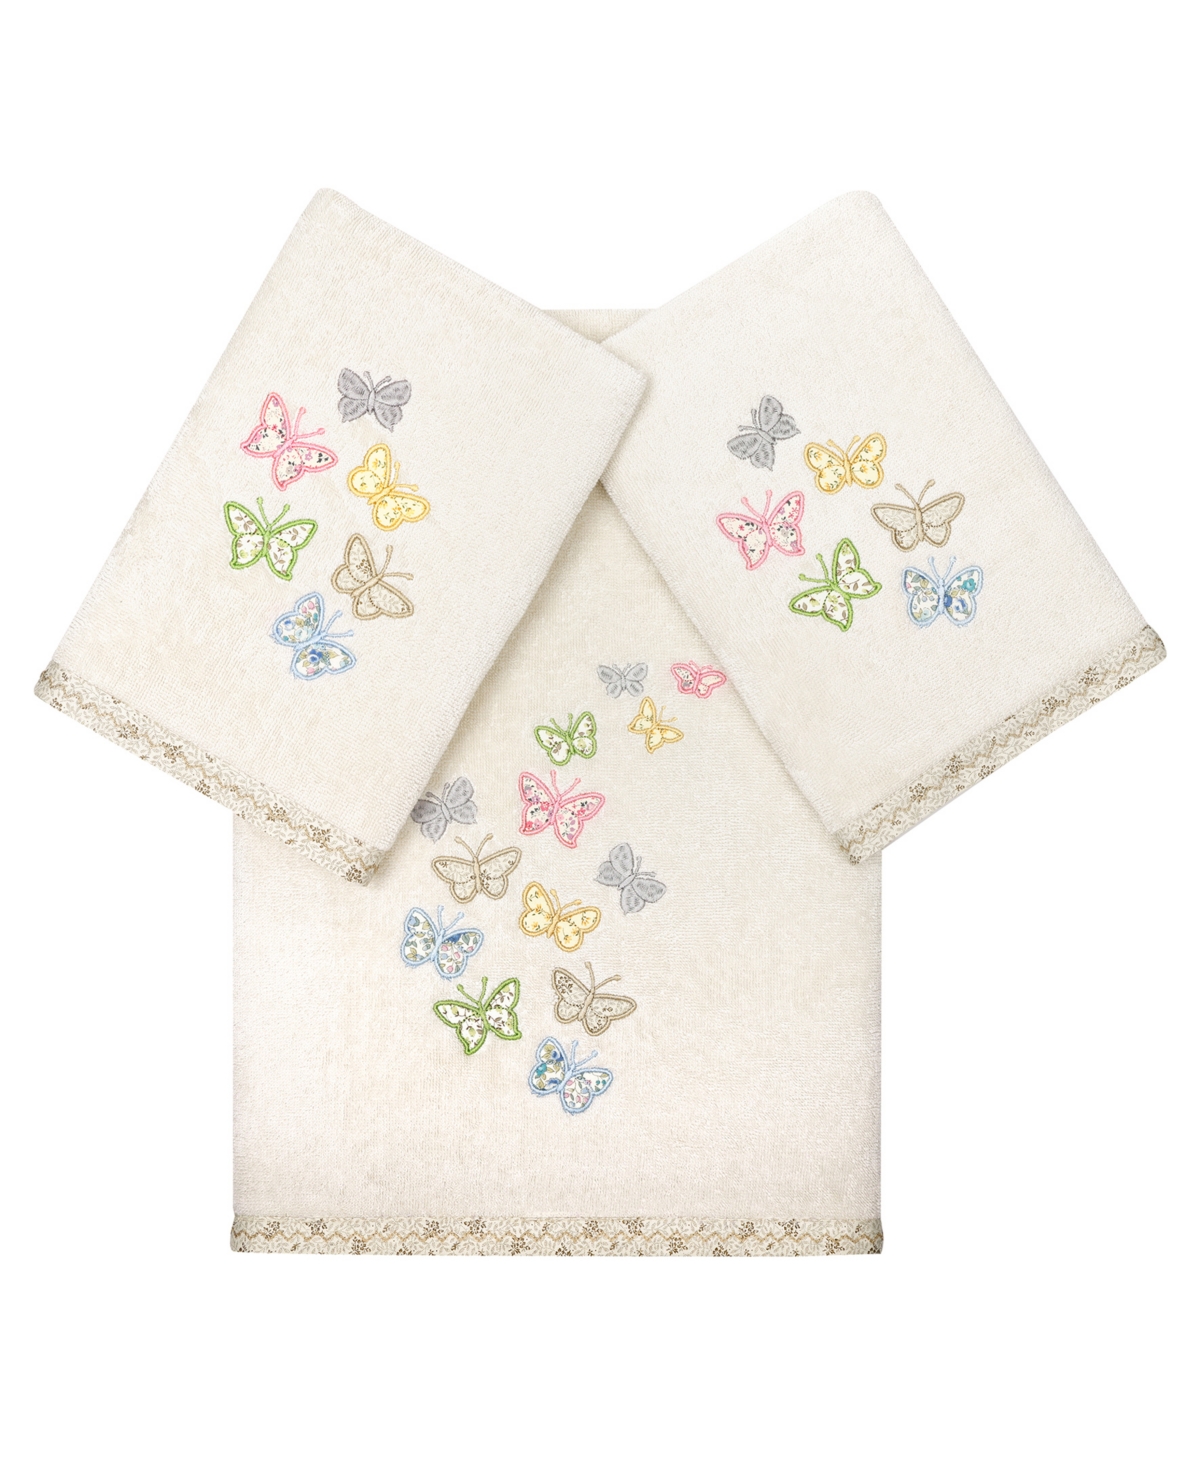 Linum Home Textiles Turkish Cotton Mariposa Embellished Towel Set, 3 Piece Bedding In Beige